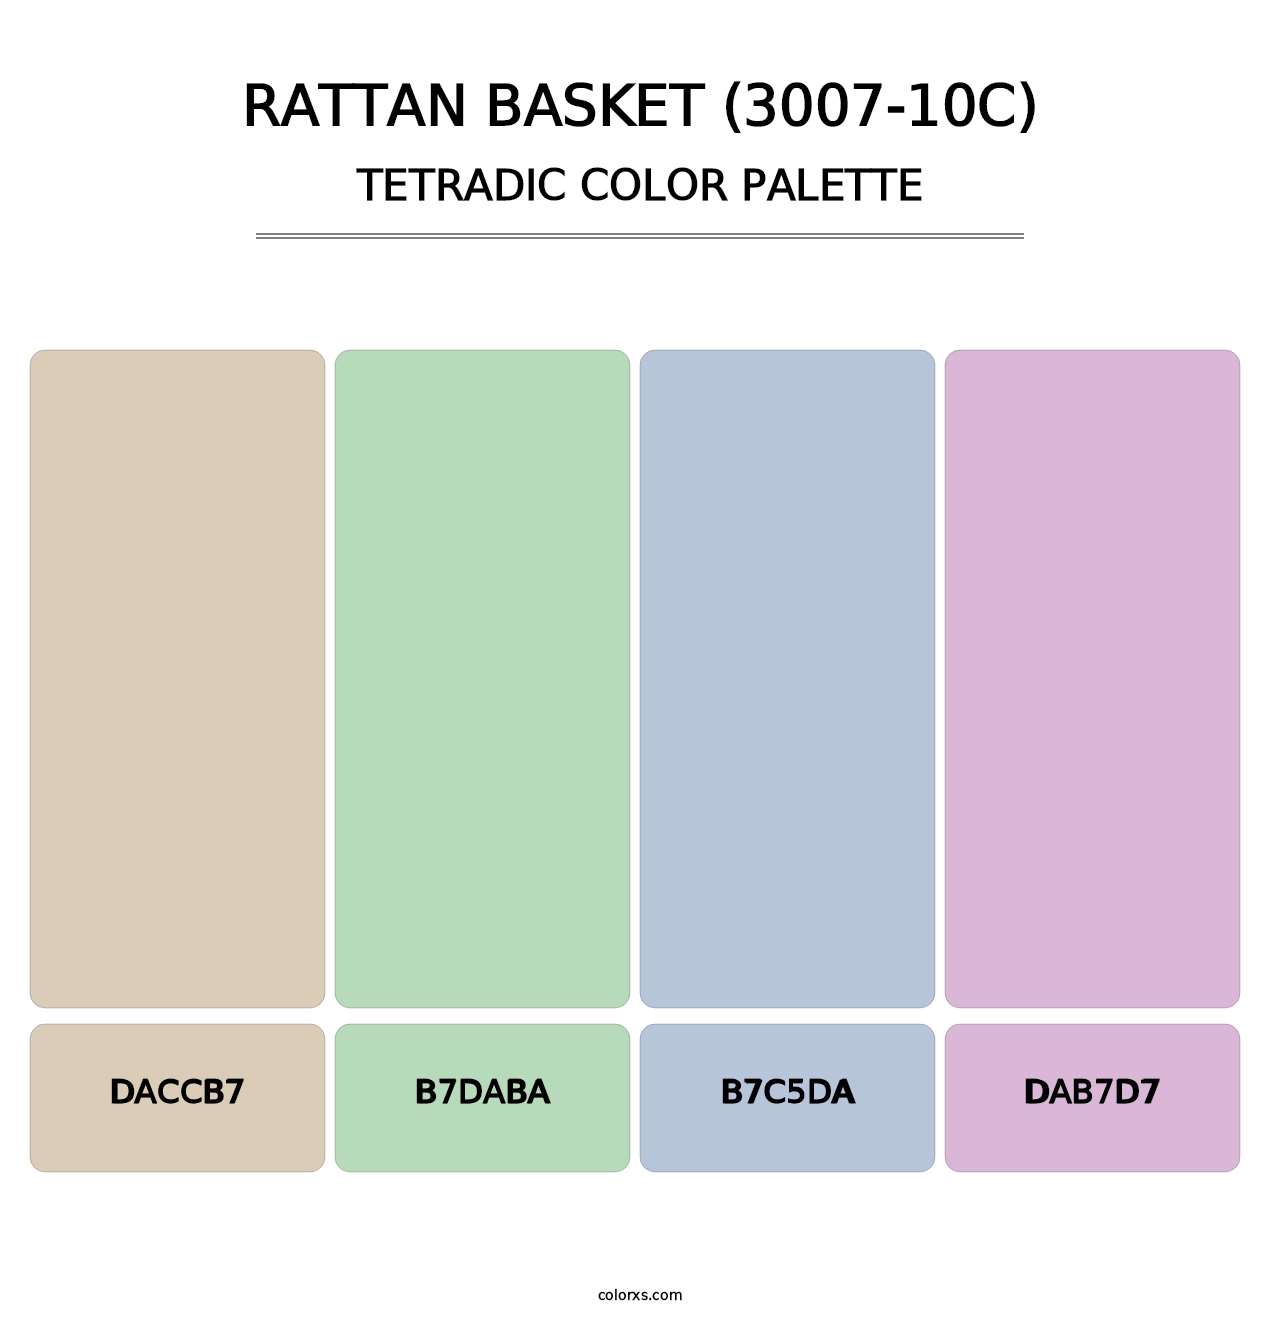 Rattan Basket (3007-10C) - Tetradic Color Palette